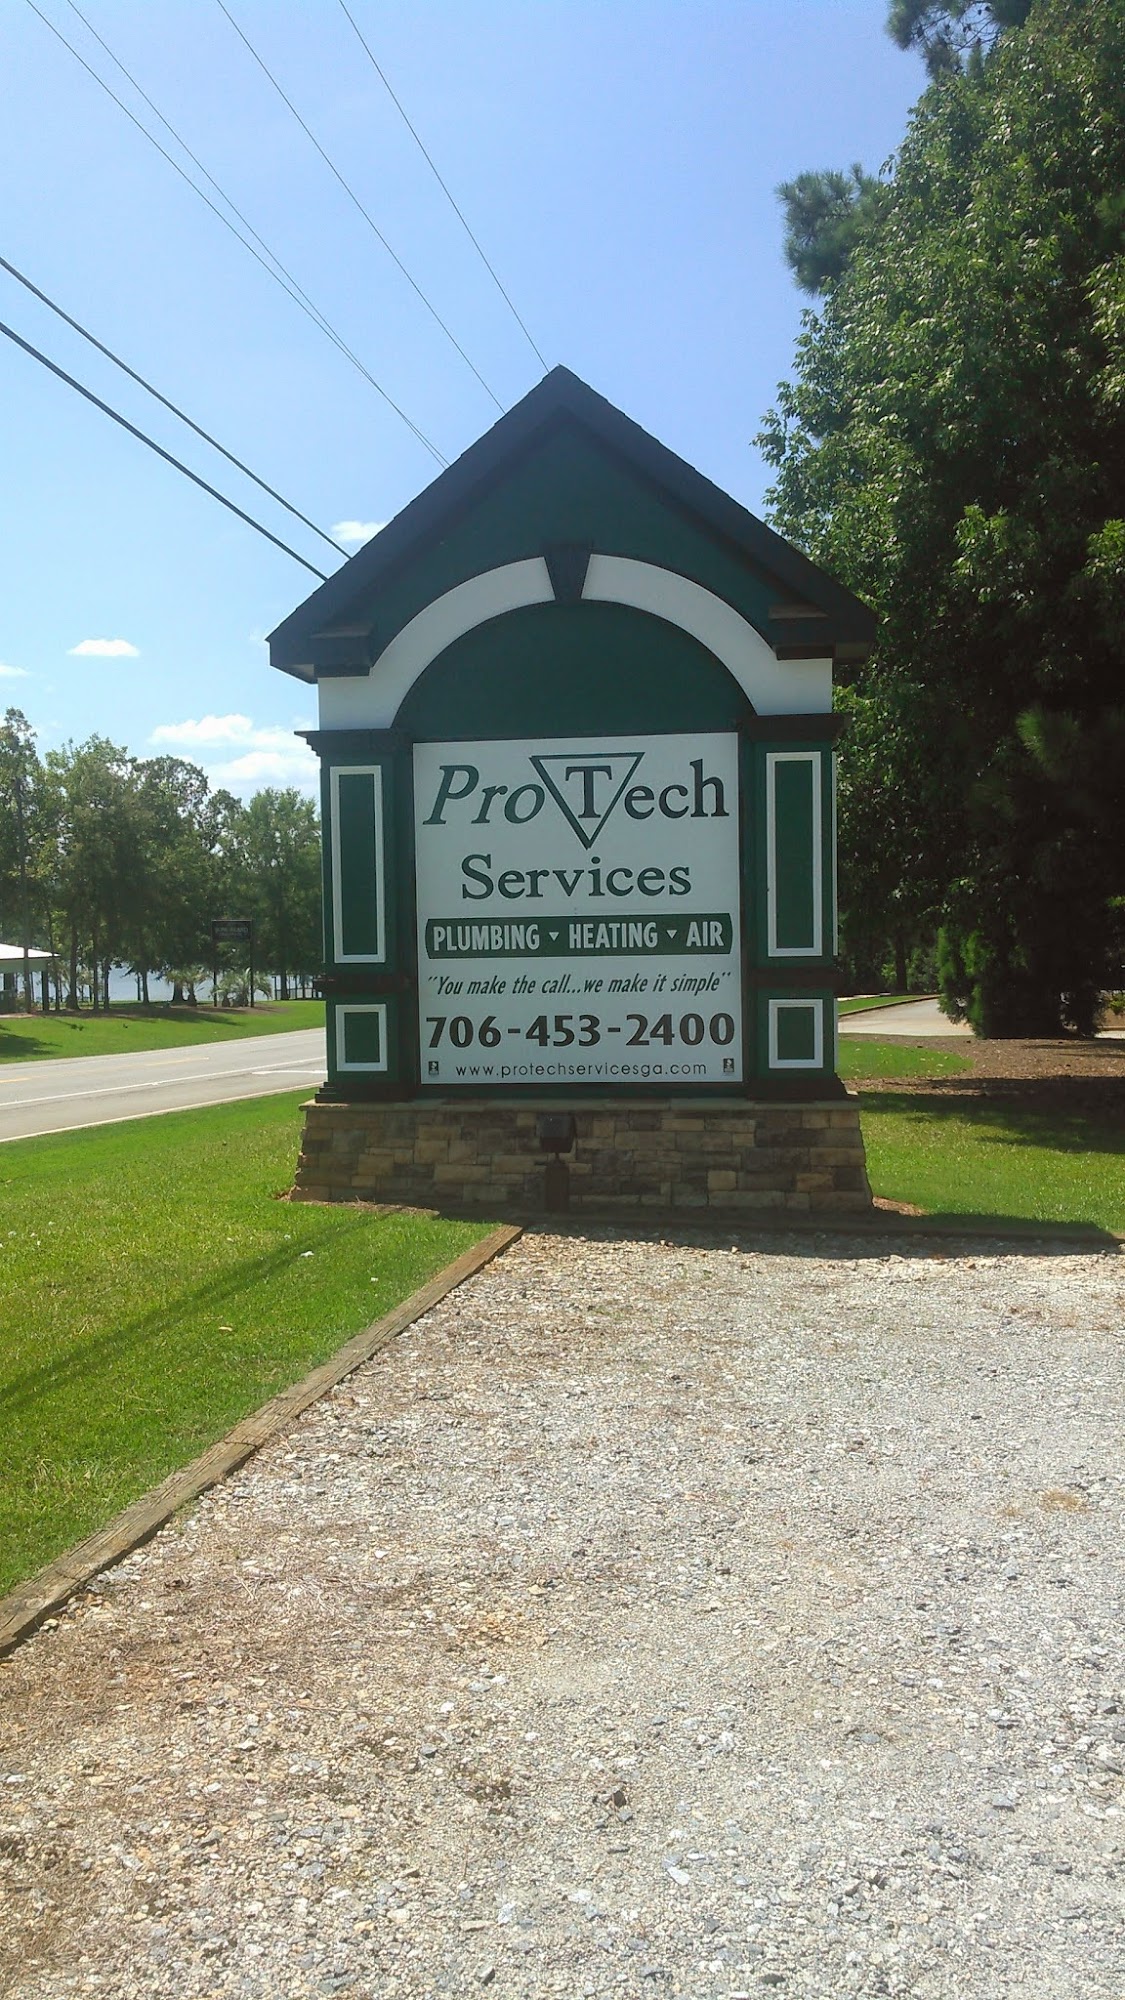 ProTech Services - Plumbing, Heating, & Air 929 Greensboro Rd, Eatonton Georgia 31024